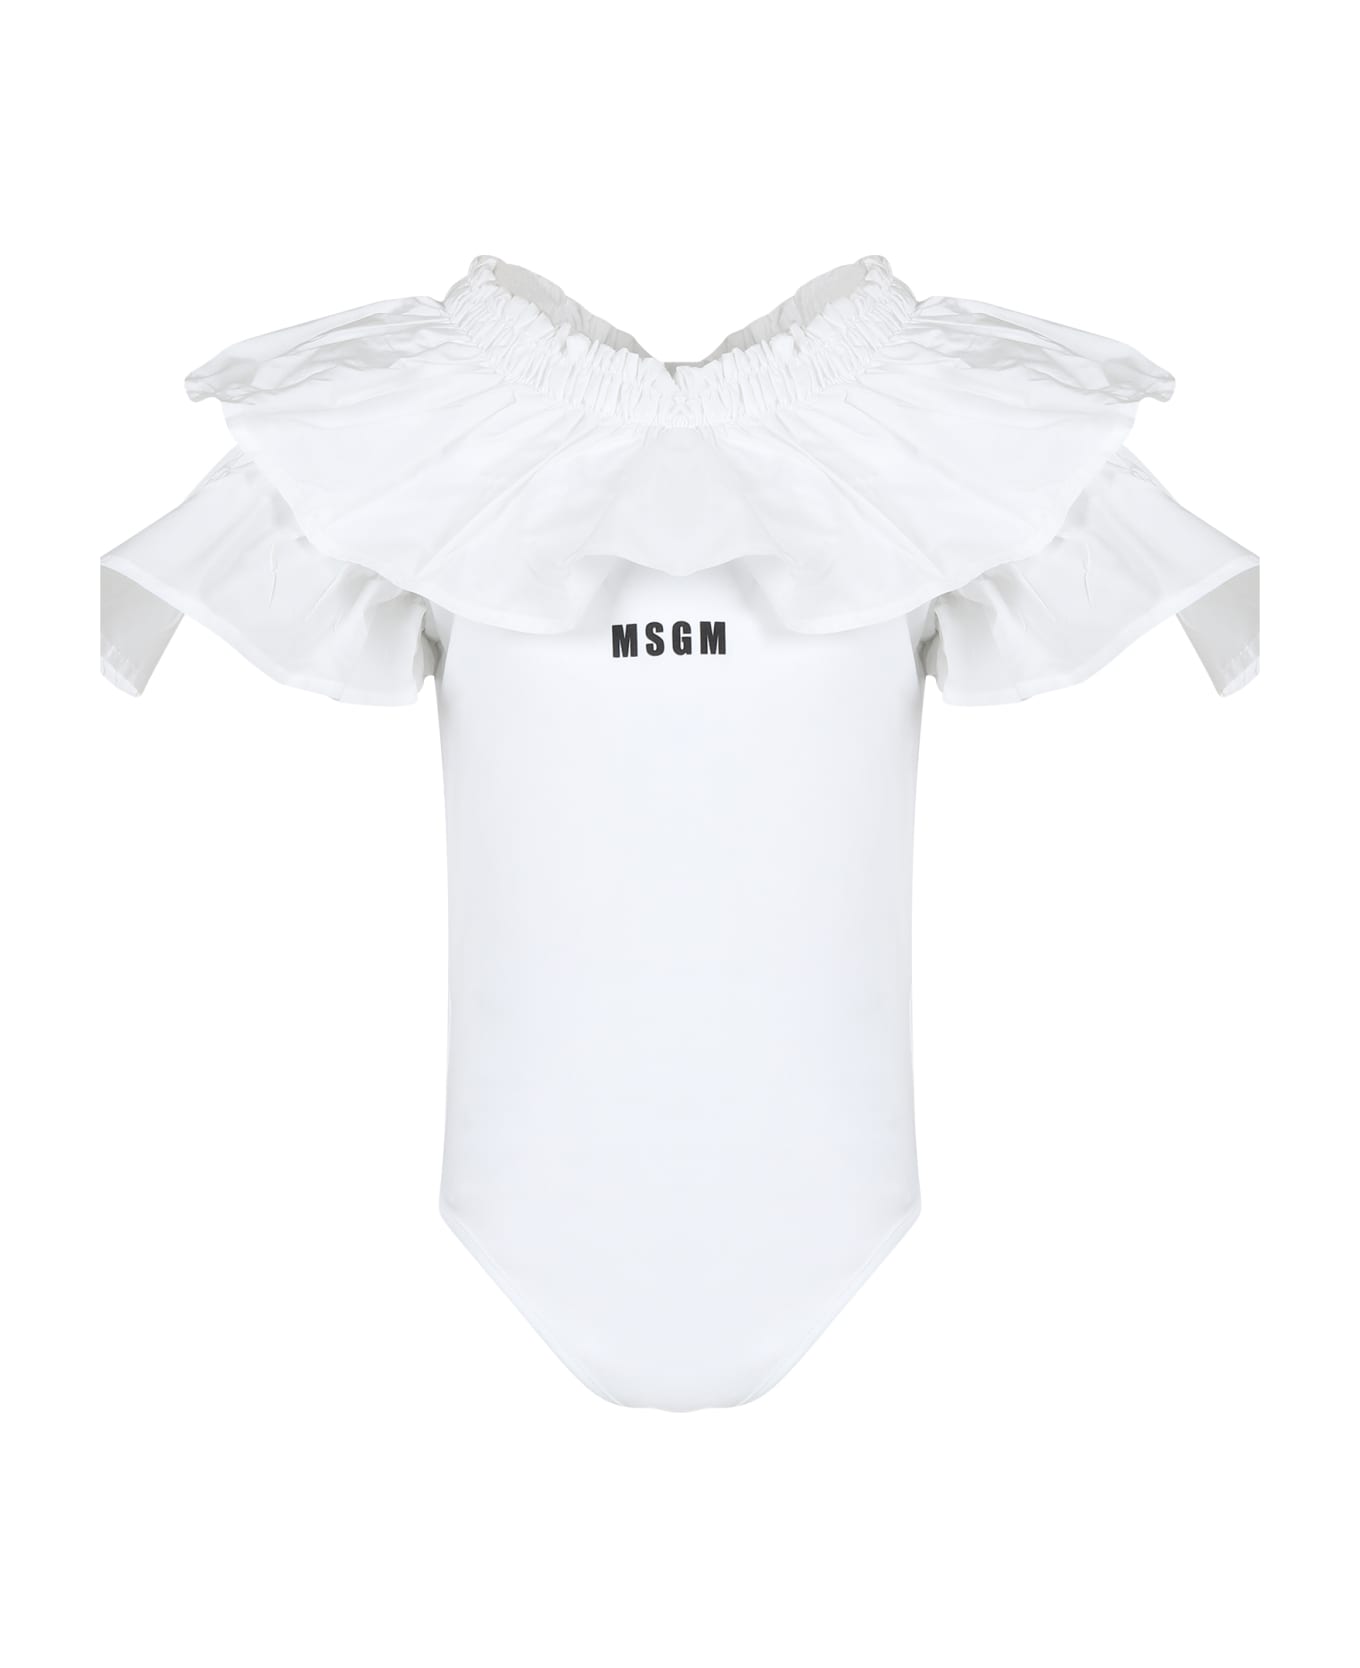 MSGM White Bodysuit For Girl With Logo - White